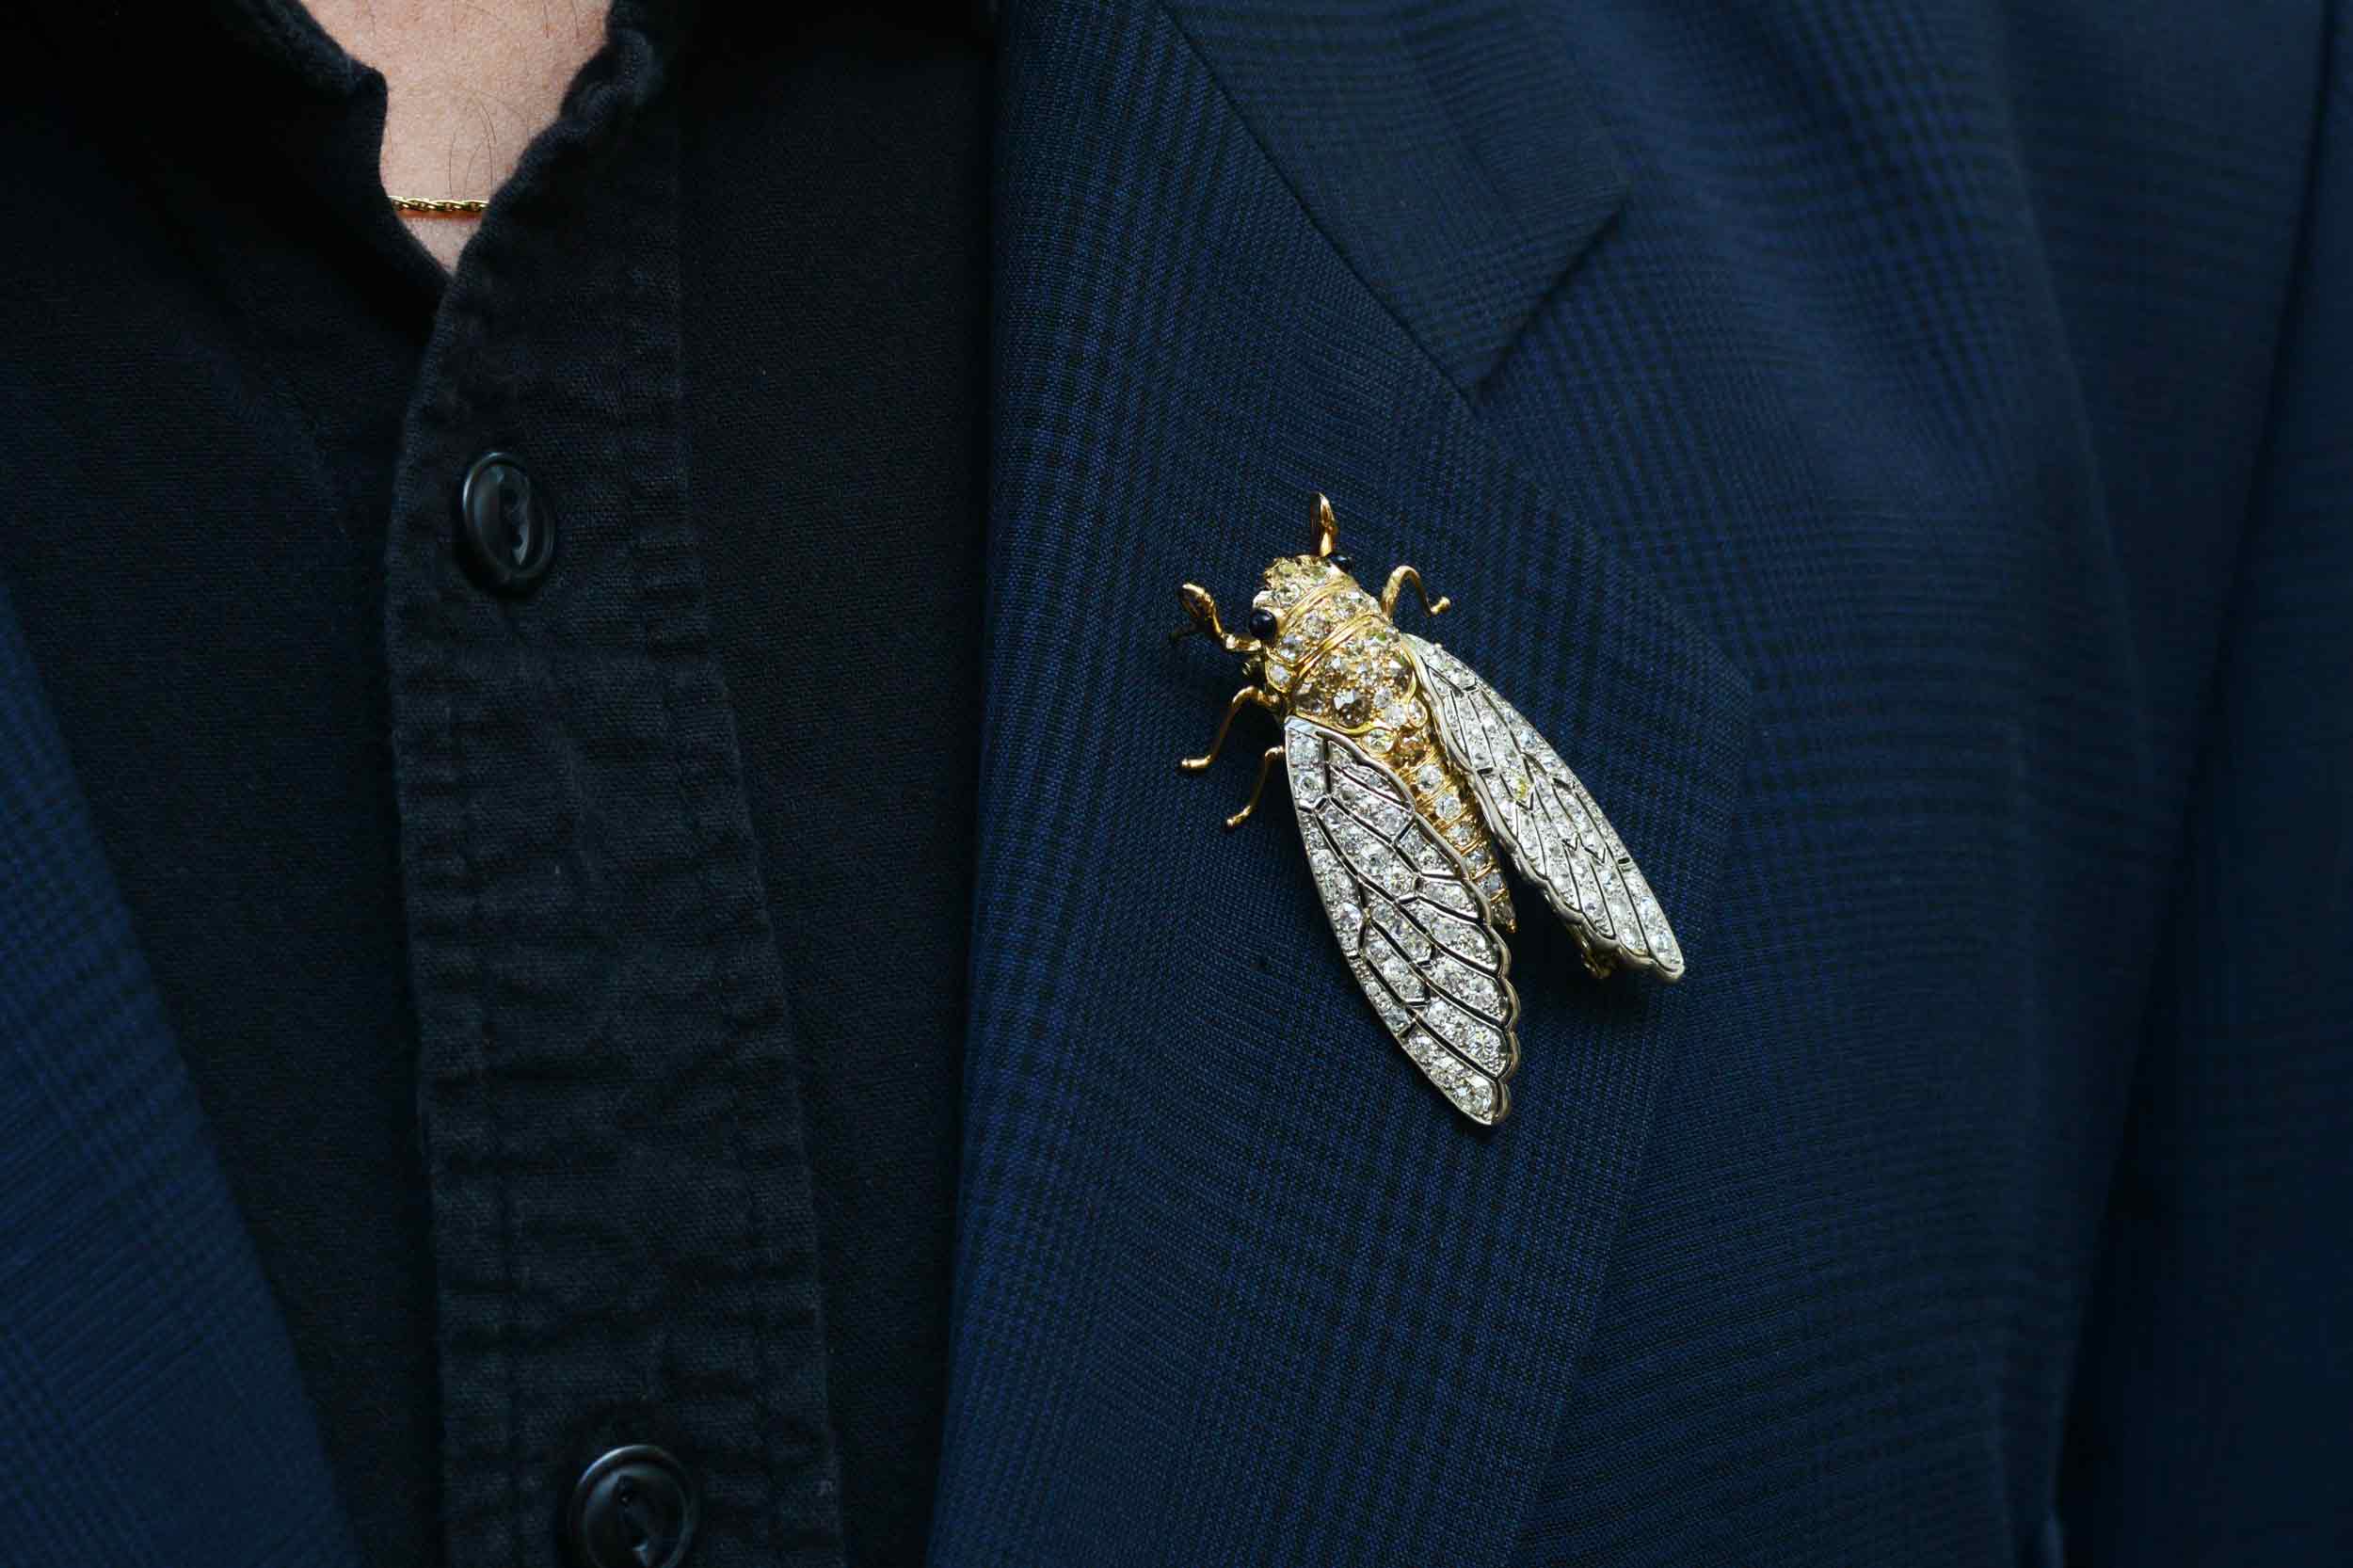 Interesting Insect Cicada Diamond Brooch Pin